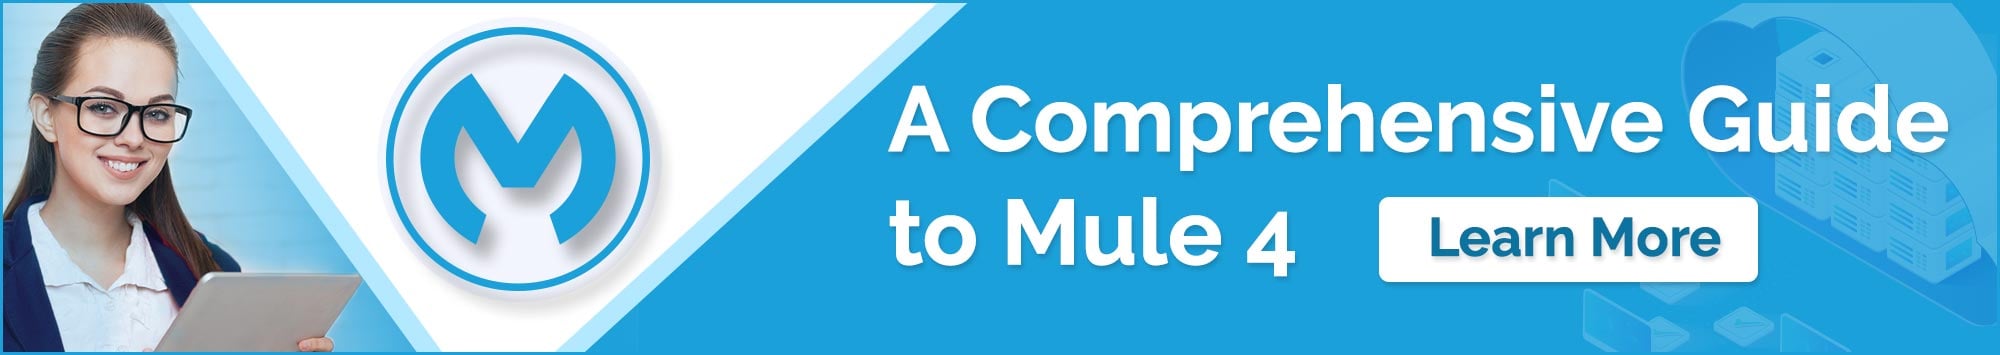 Mulesoft_Guide_Horizontal